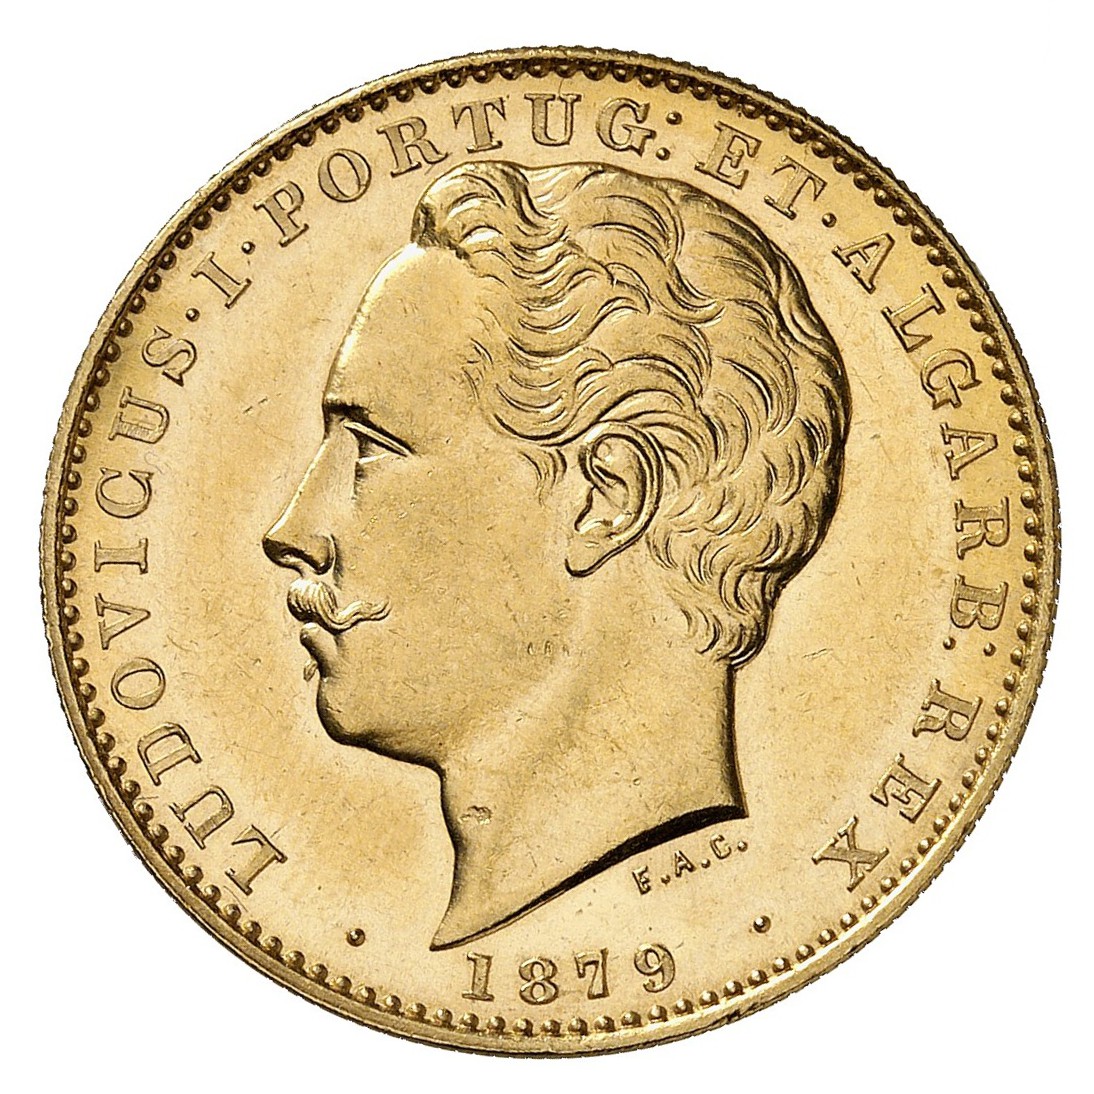 Portugal - 10 000 Reis - 1879 avers